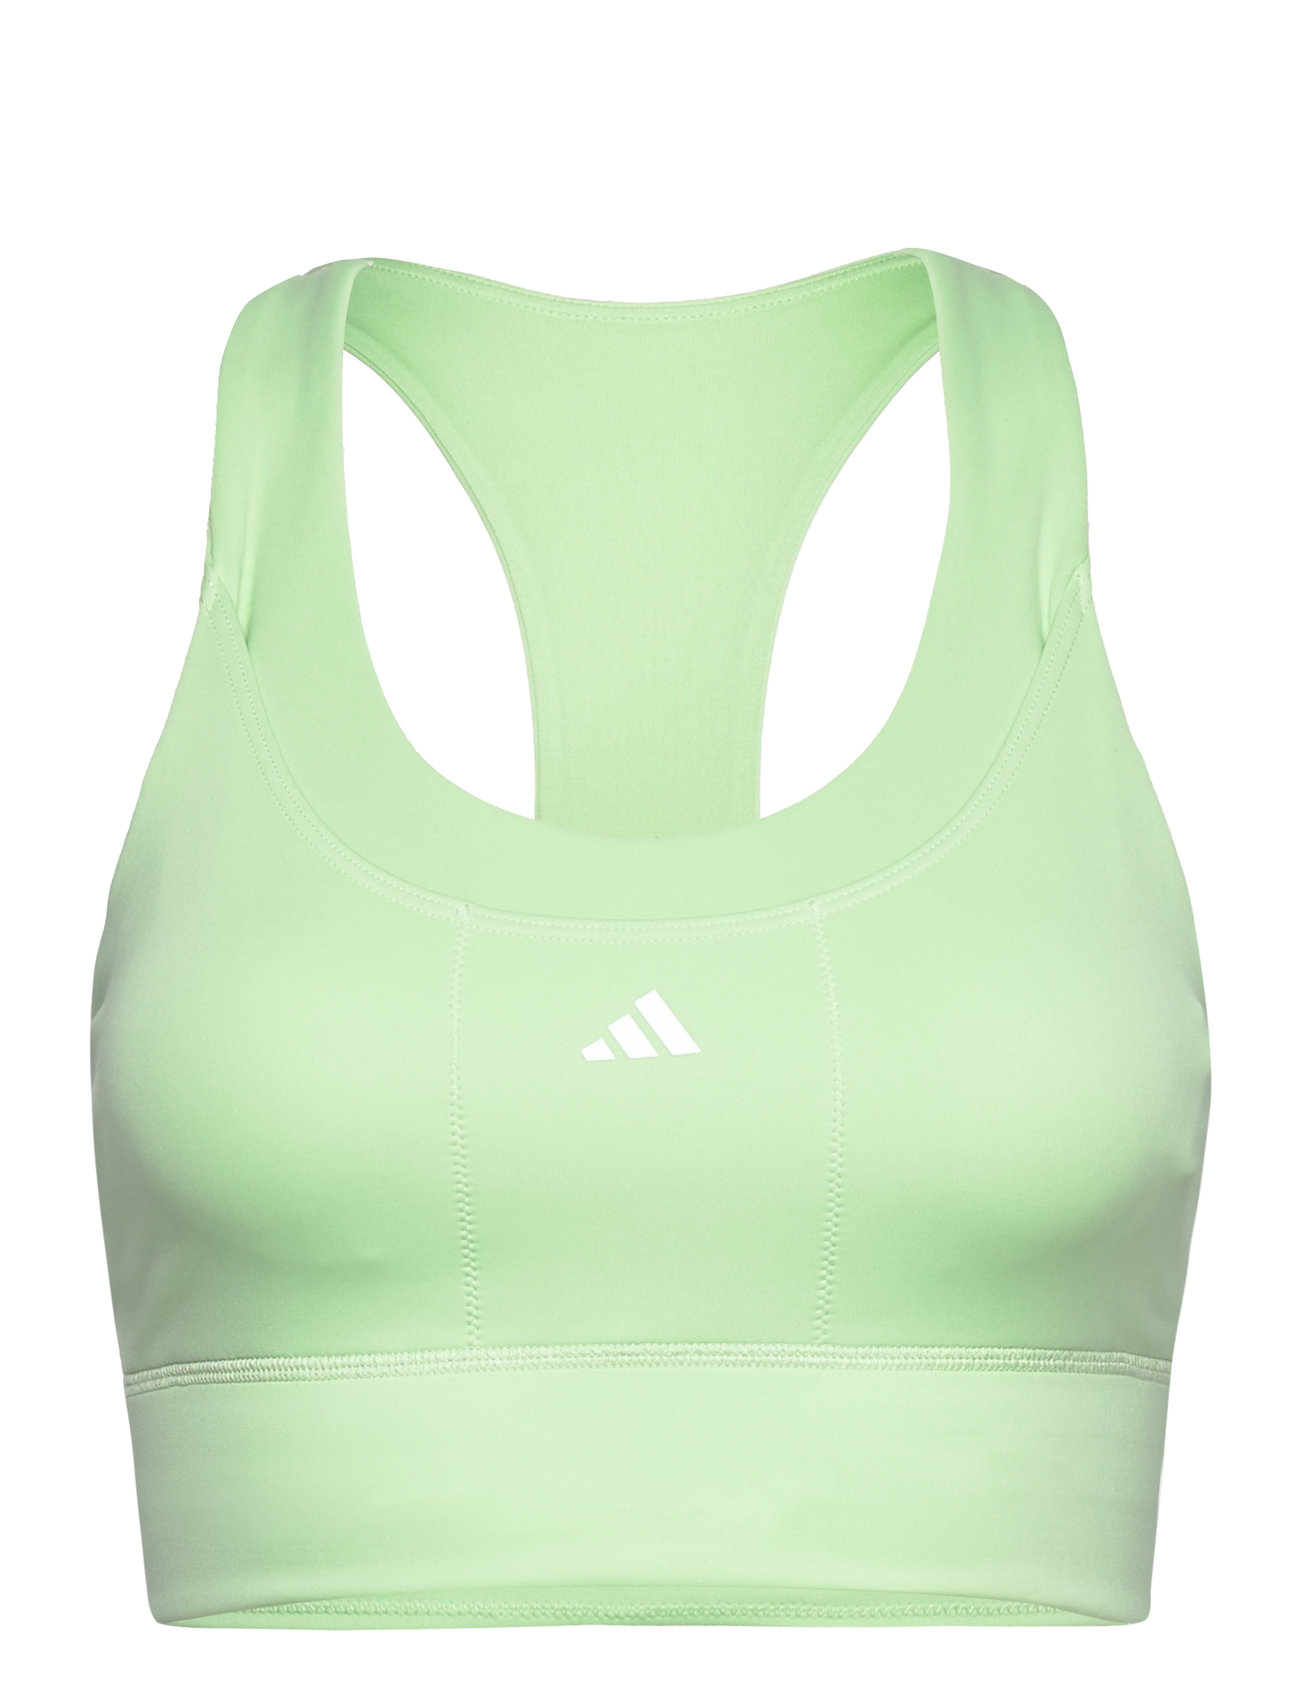 Run Ms Pkt Bra Sport Bras & Tops Sports Bras - All Green Adidas Performance